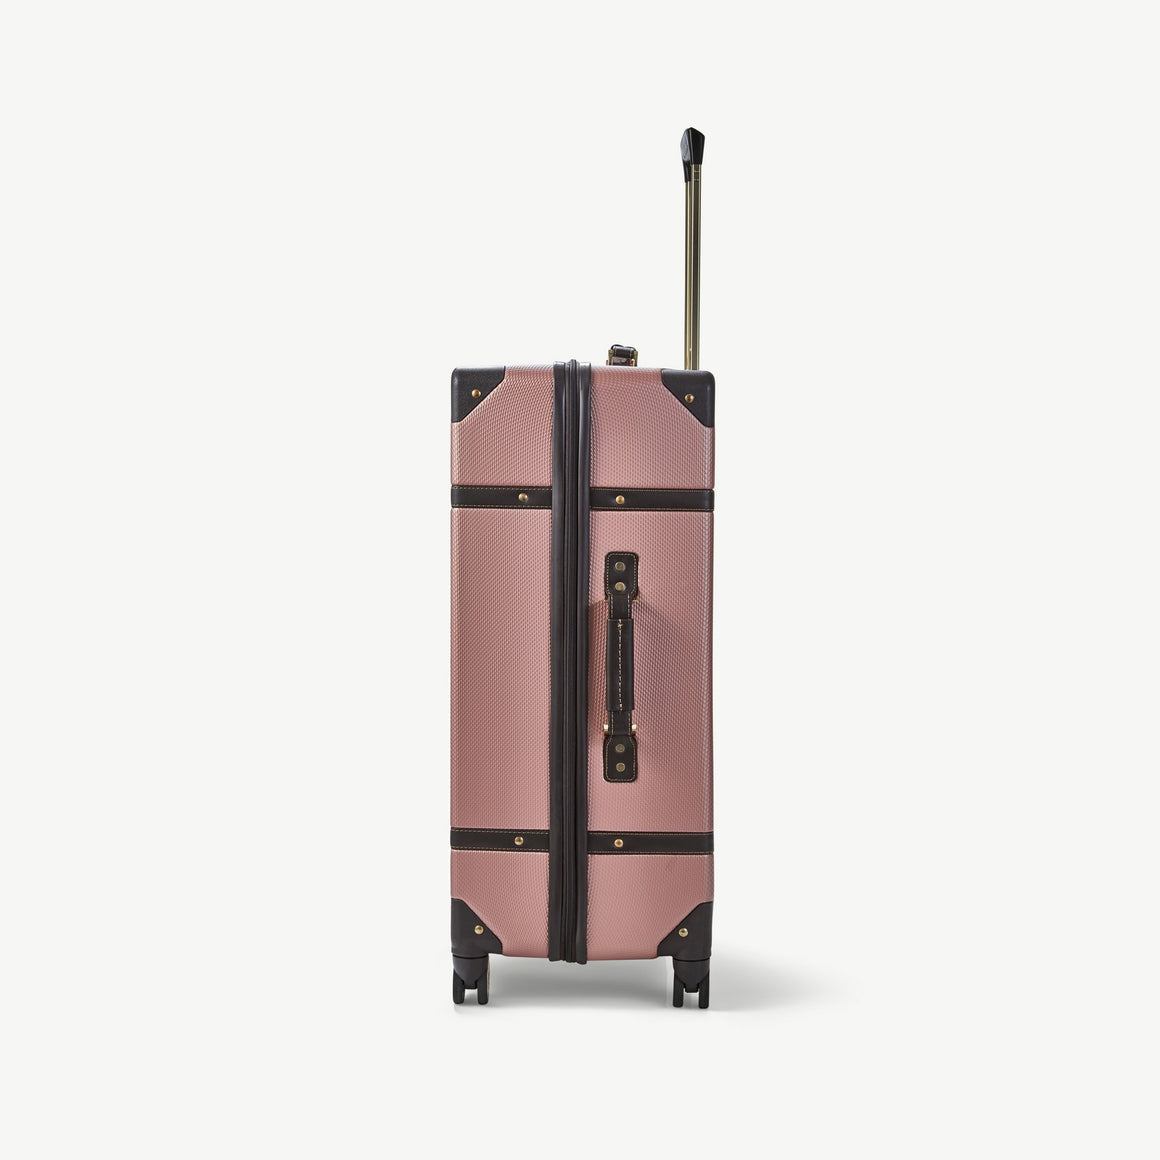 Vintage Set of 3 Suitcases in Rose Pink